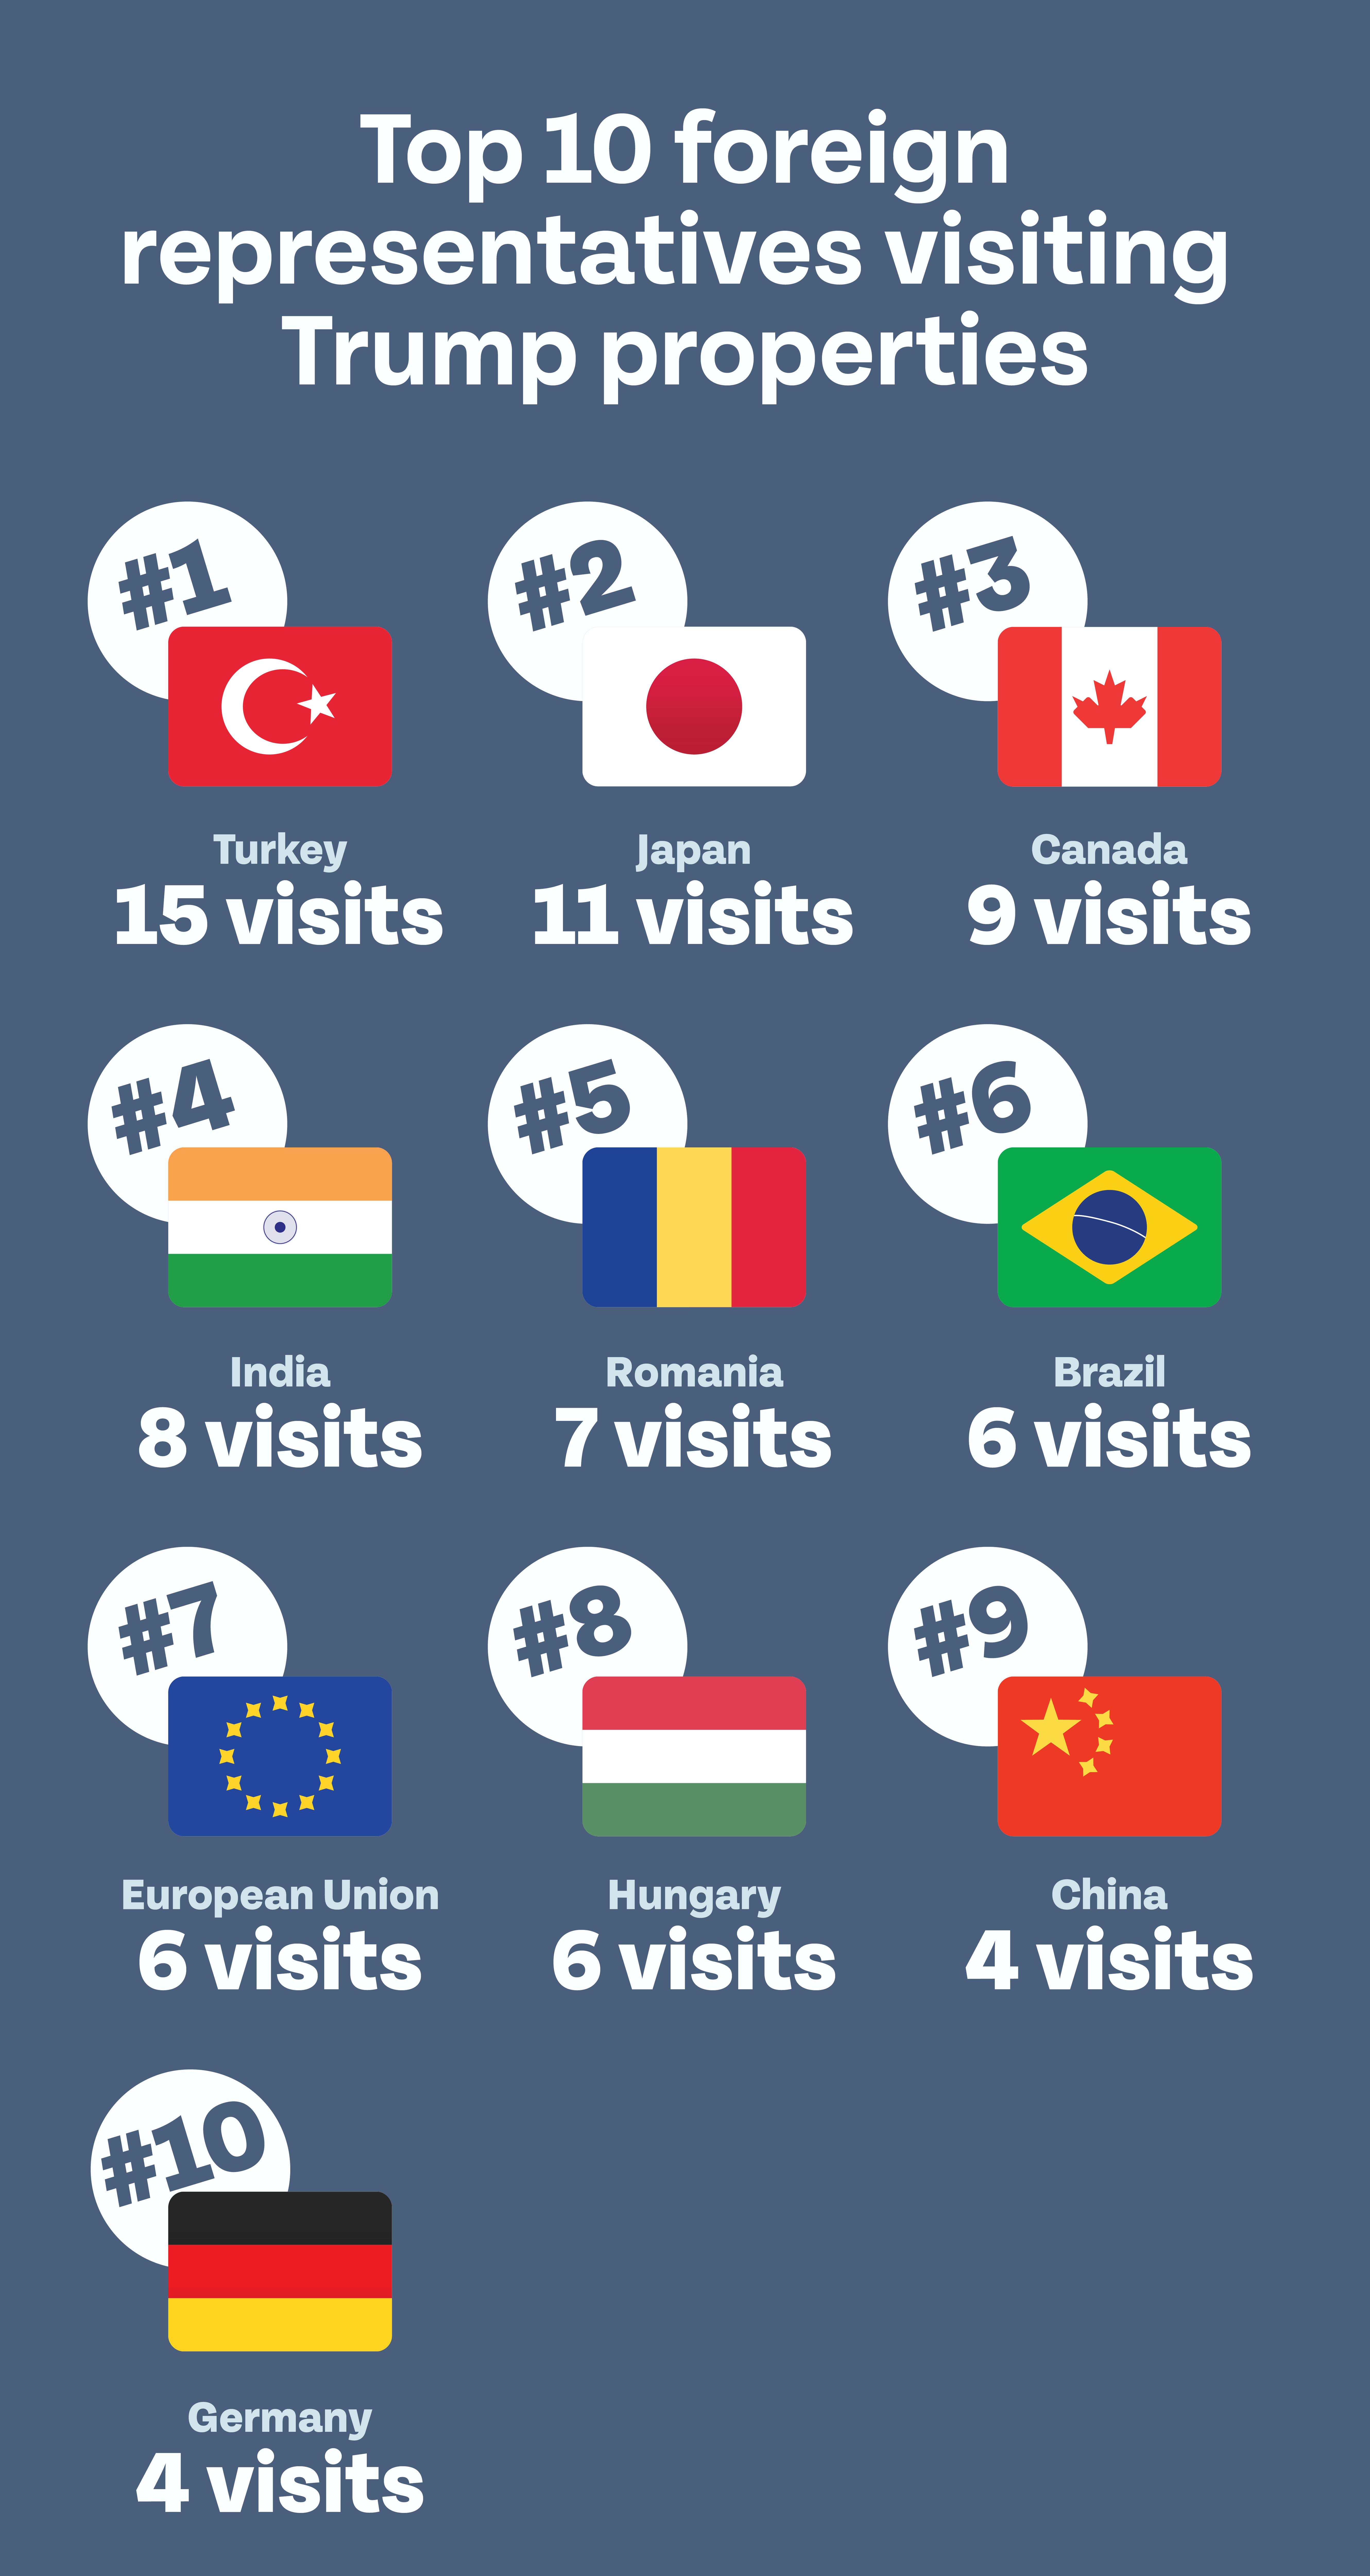 Title: “Top 10 foreign representatives visiting Trump properties.” Country flags are listed next to names: "#1 Turkey, 15 visits; #2 Japan, 11 visits; #3 Canada, 9 visits; #4 India, 8 visits; #5 Romania, 7 visits; #6 Brazil, 6 visits; #7 European Union, 6 visits; #8 Hungary, 6 visits; #9 China, 4 visits; #10, Germany, 4 visits"